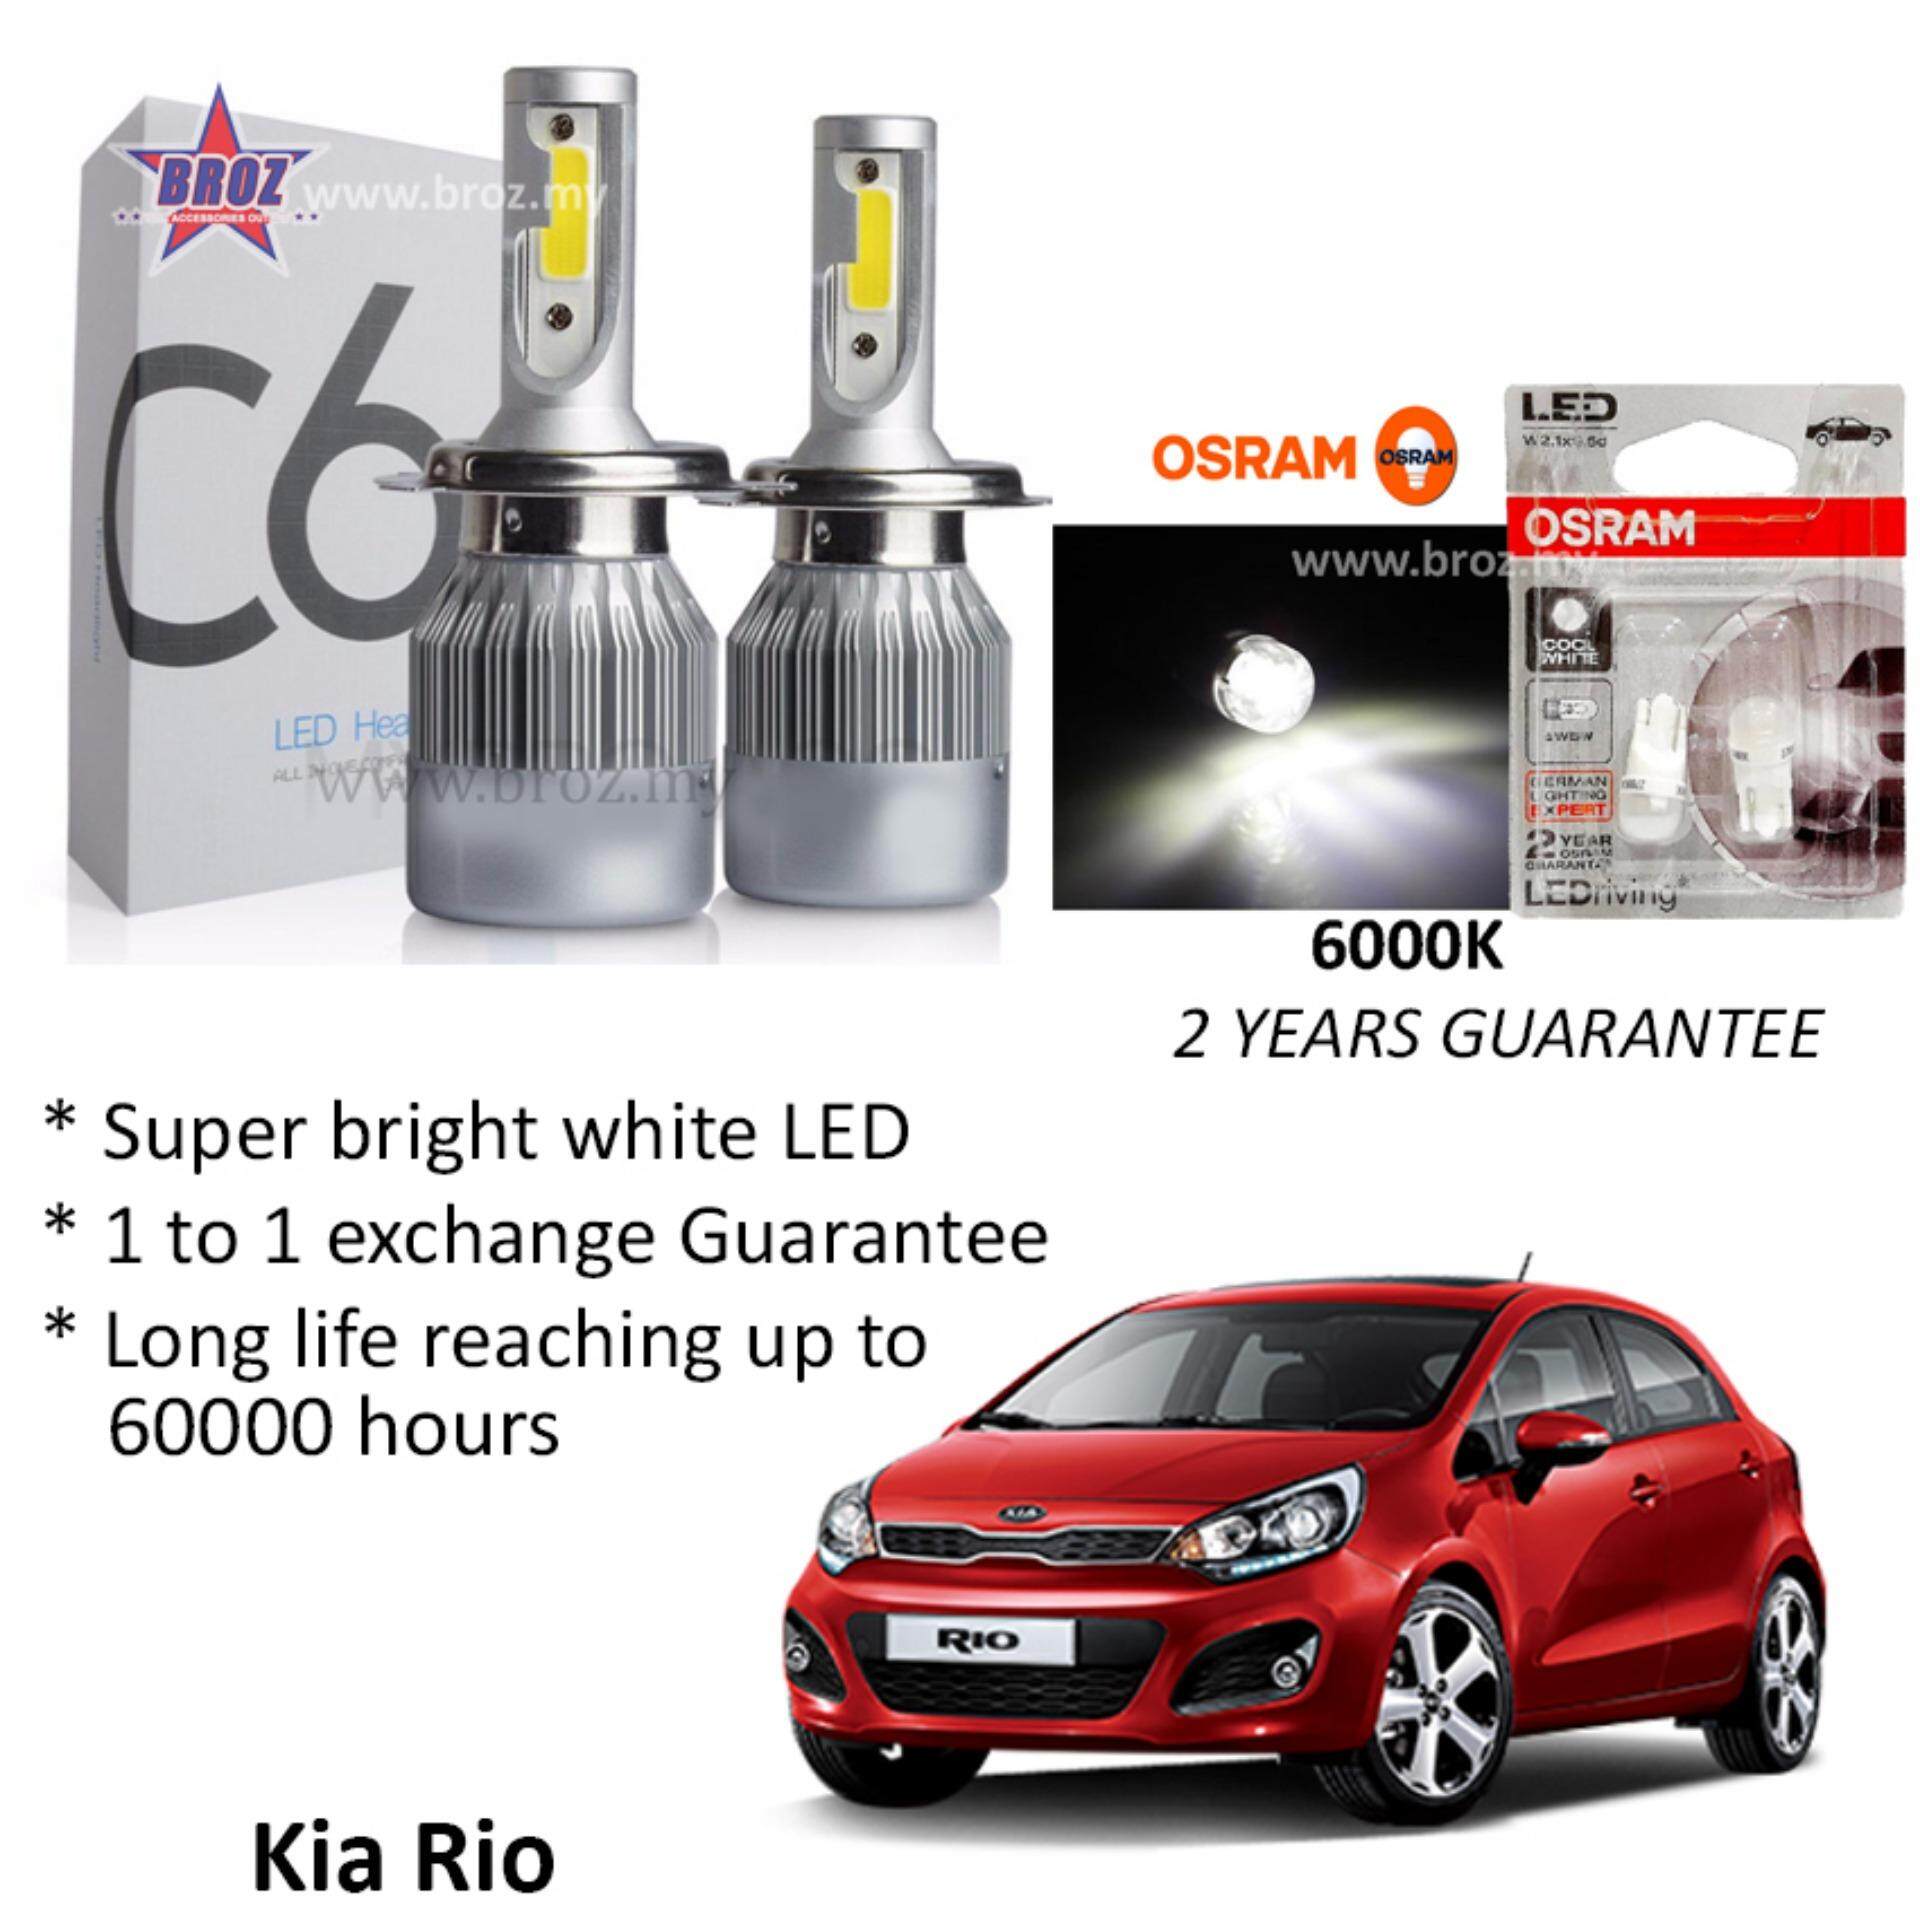 LED Headlight Kit H4 9003 White 6000K Hi/Lo CREE Bulb for KIA Rio Rio5 2001-2017